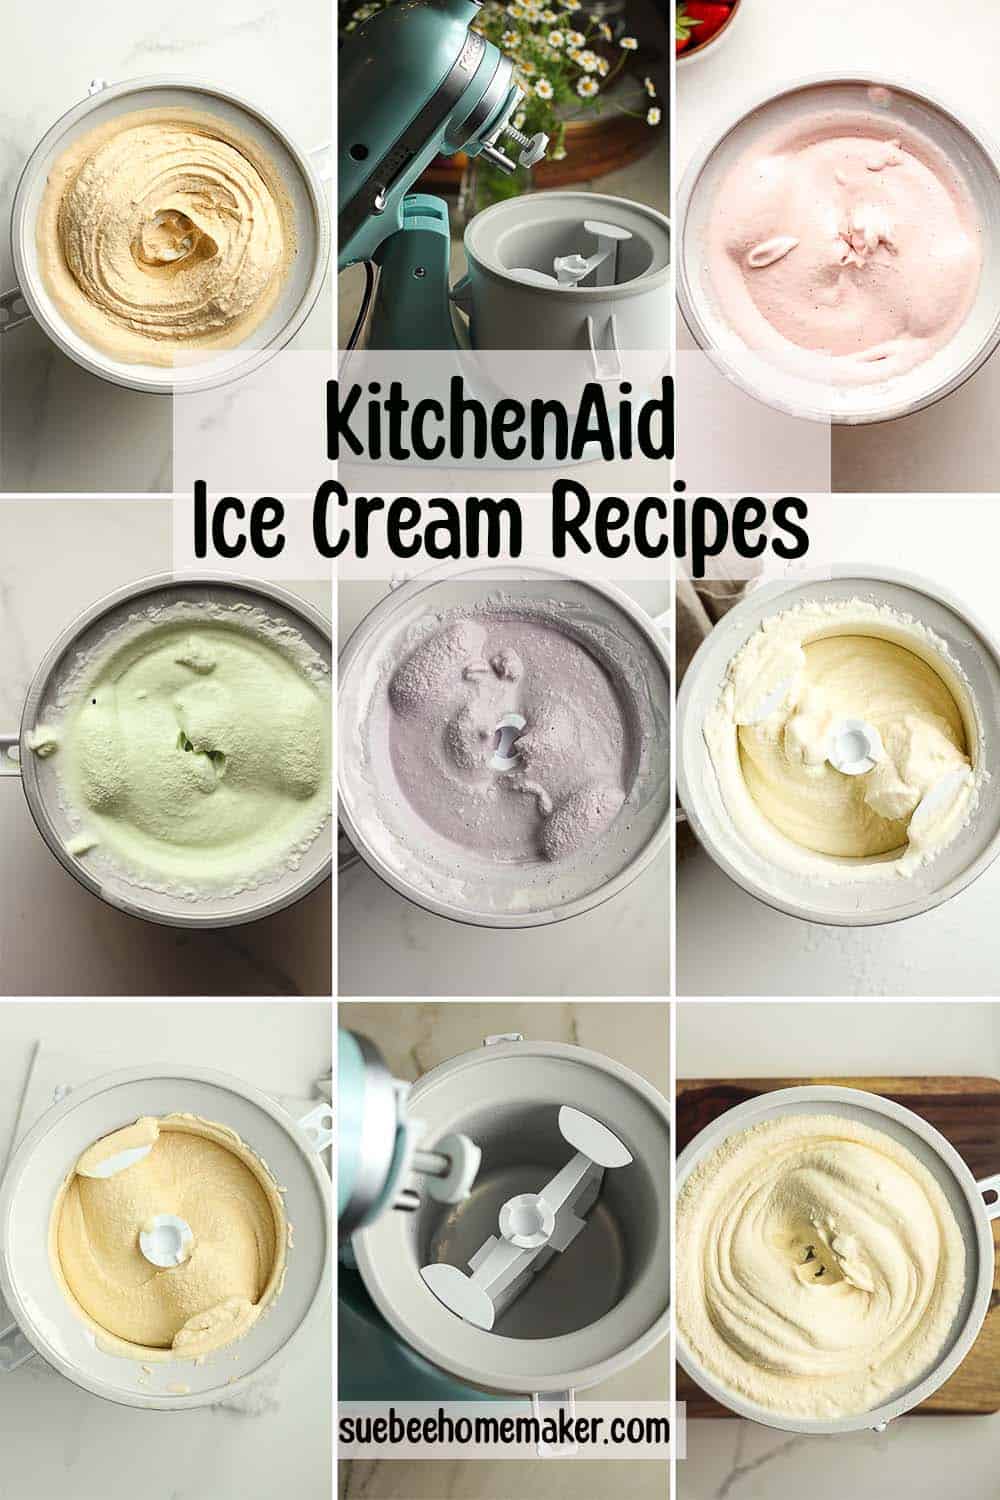 A collage of ice cream recipes using the KitchenAid Attachment.